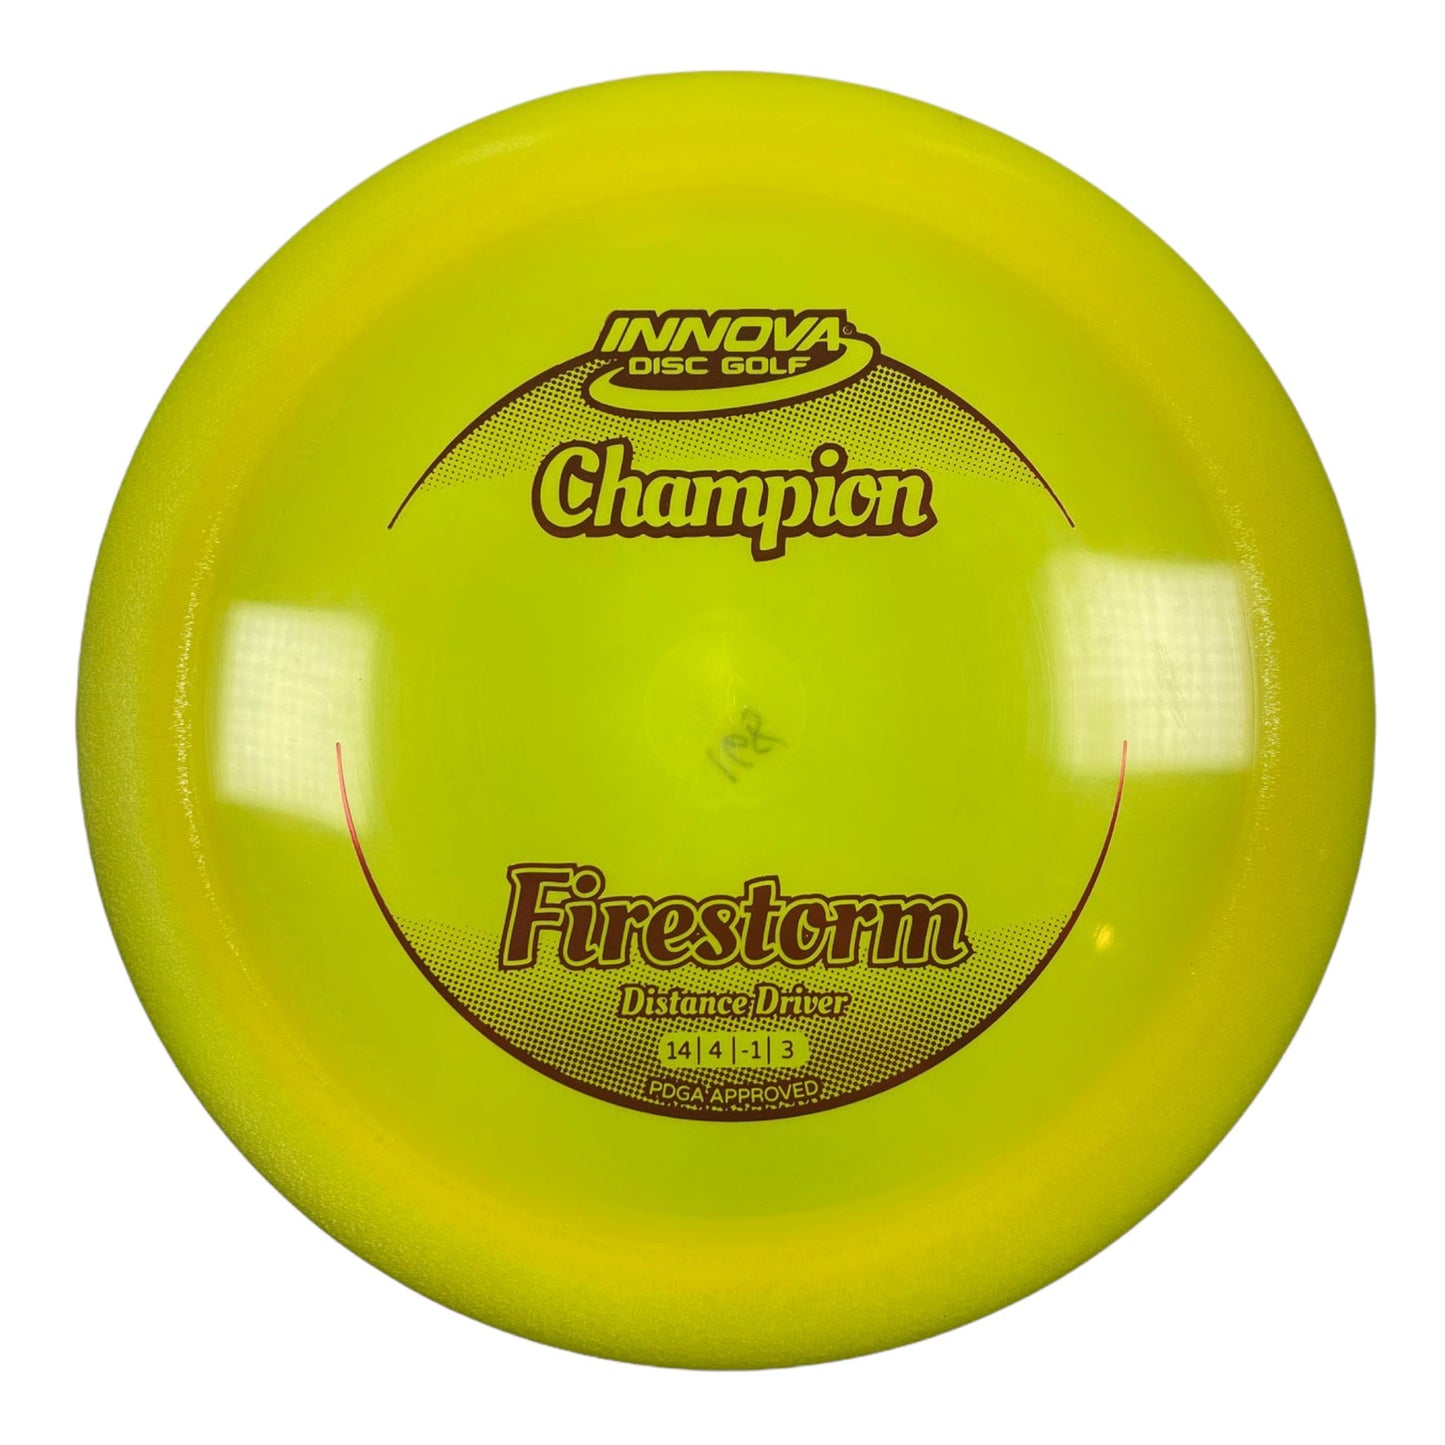 Innova Champion Discs Firestorm | Champion | Yellow/Red 168g Disc Golf